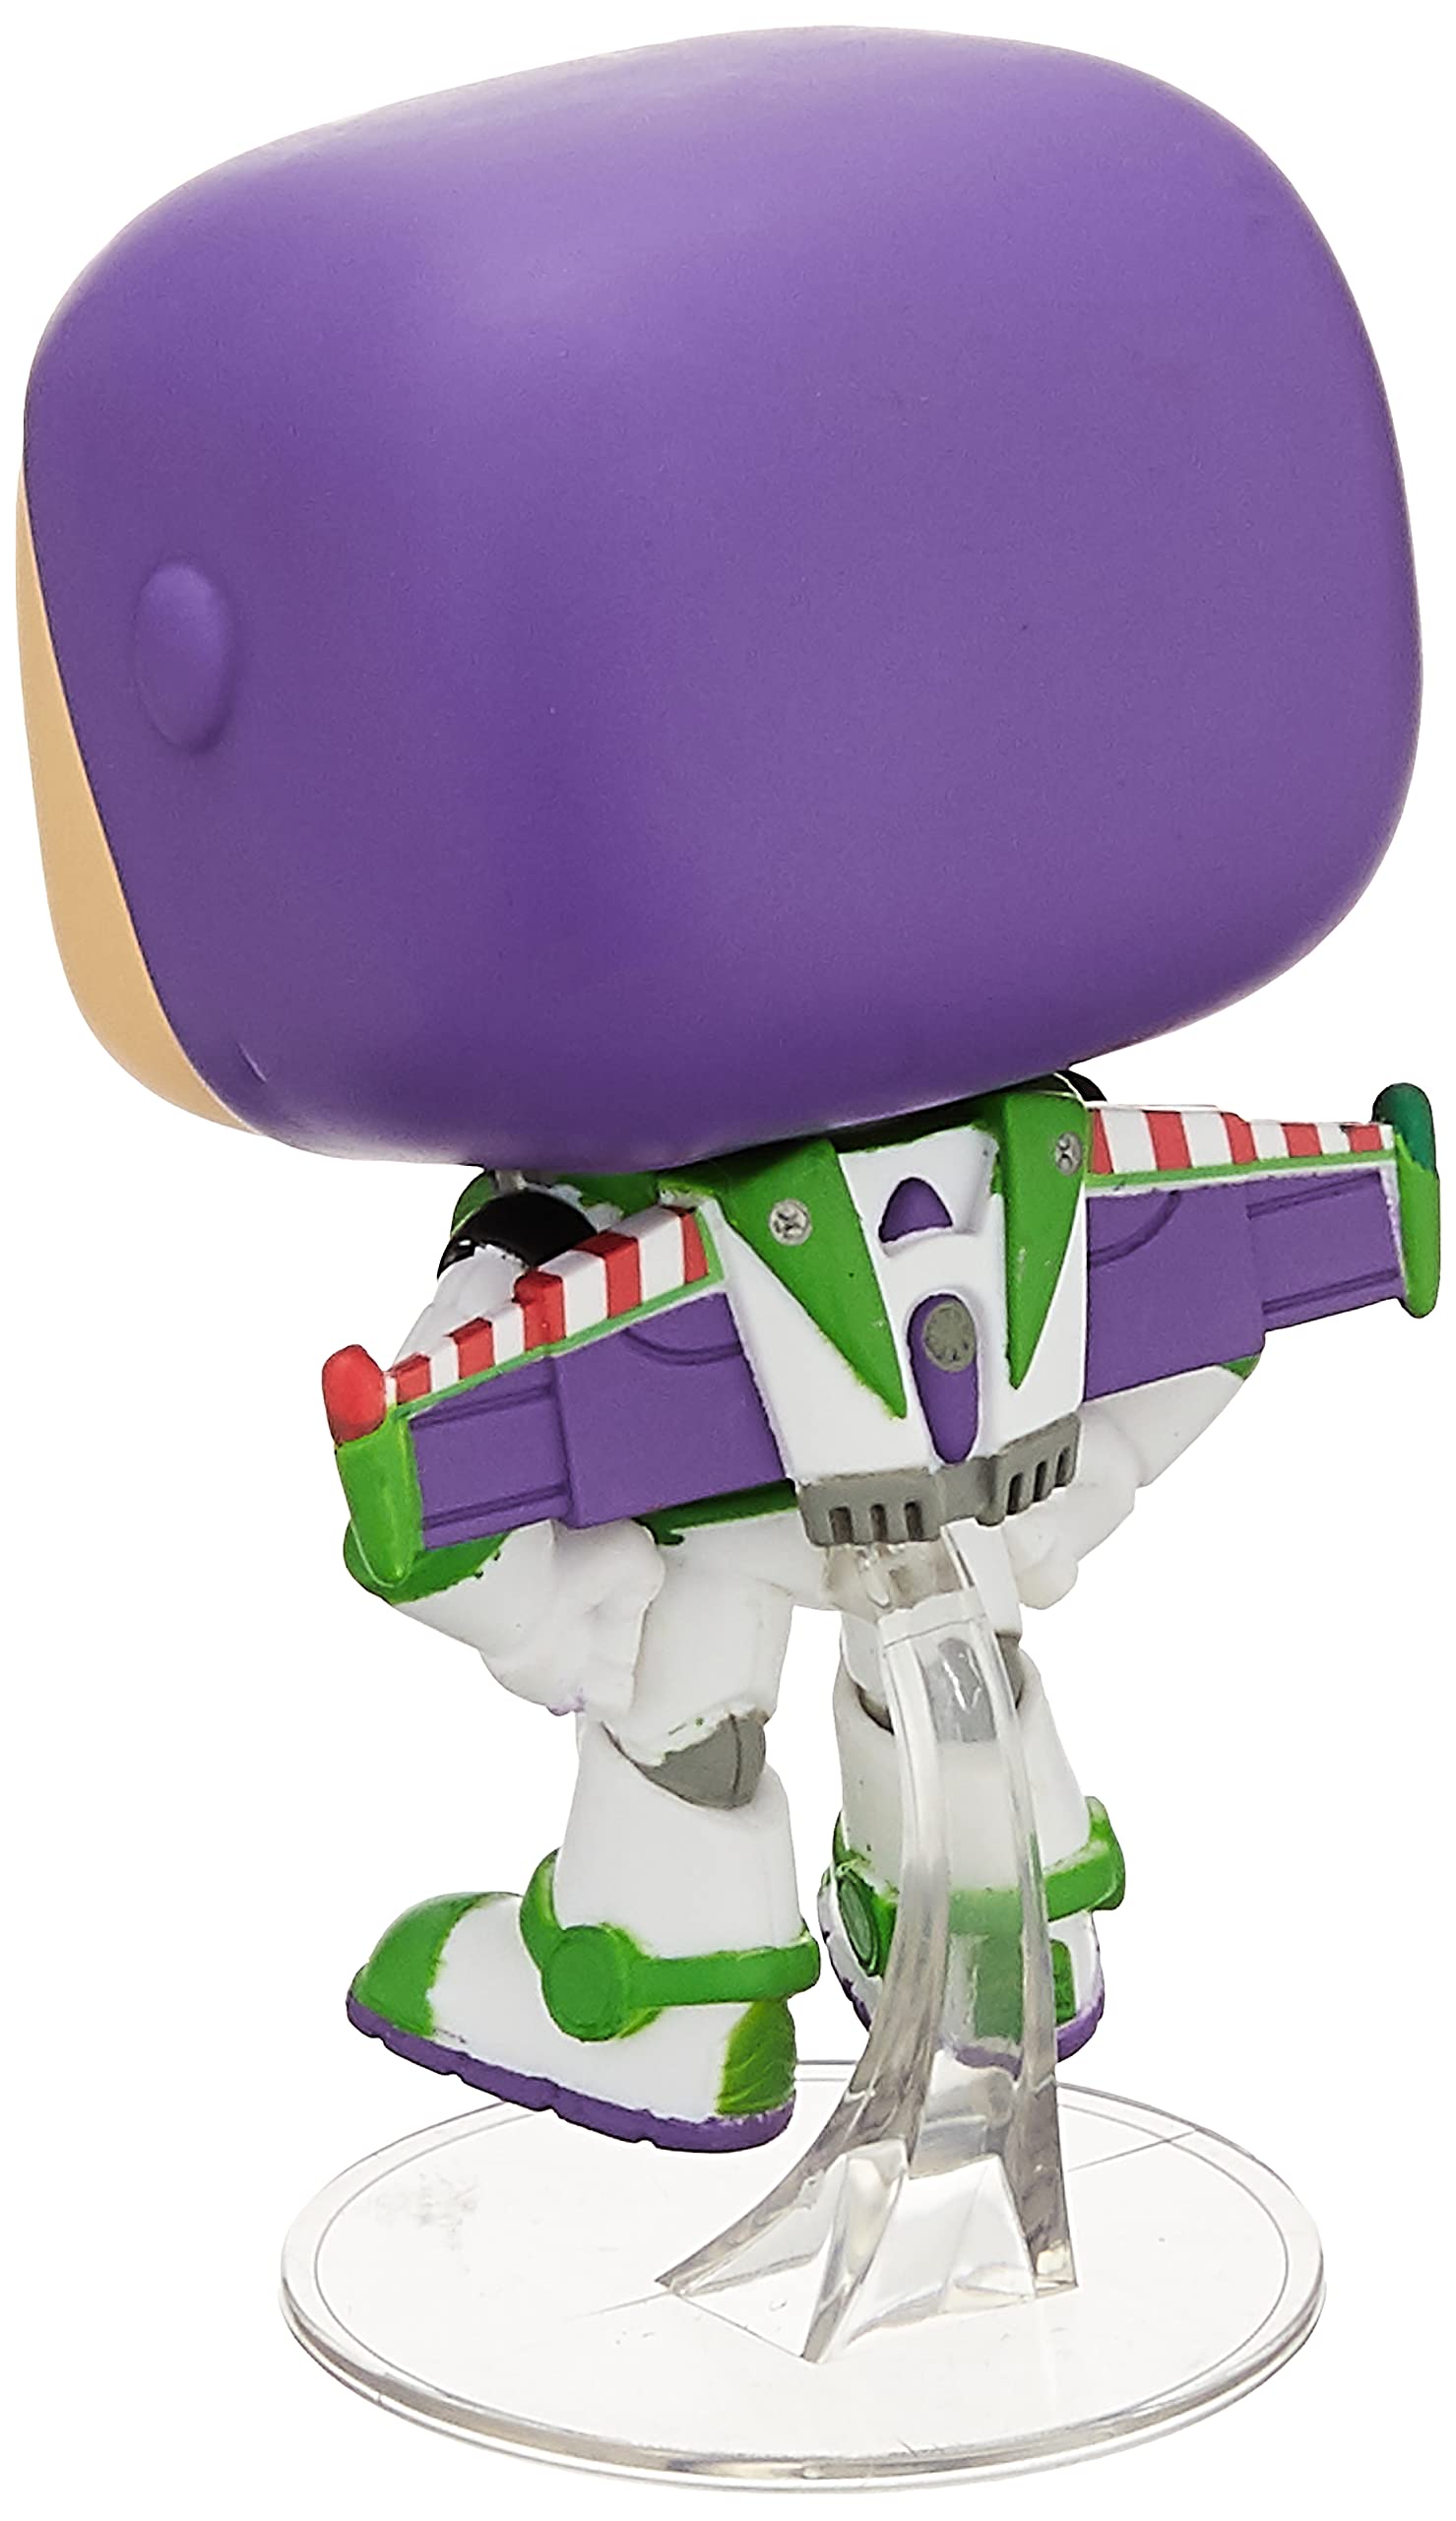 Funko Pop! Disney: Toy Story 4 - Buzz Lightyear Floating, Amazon Exclusive